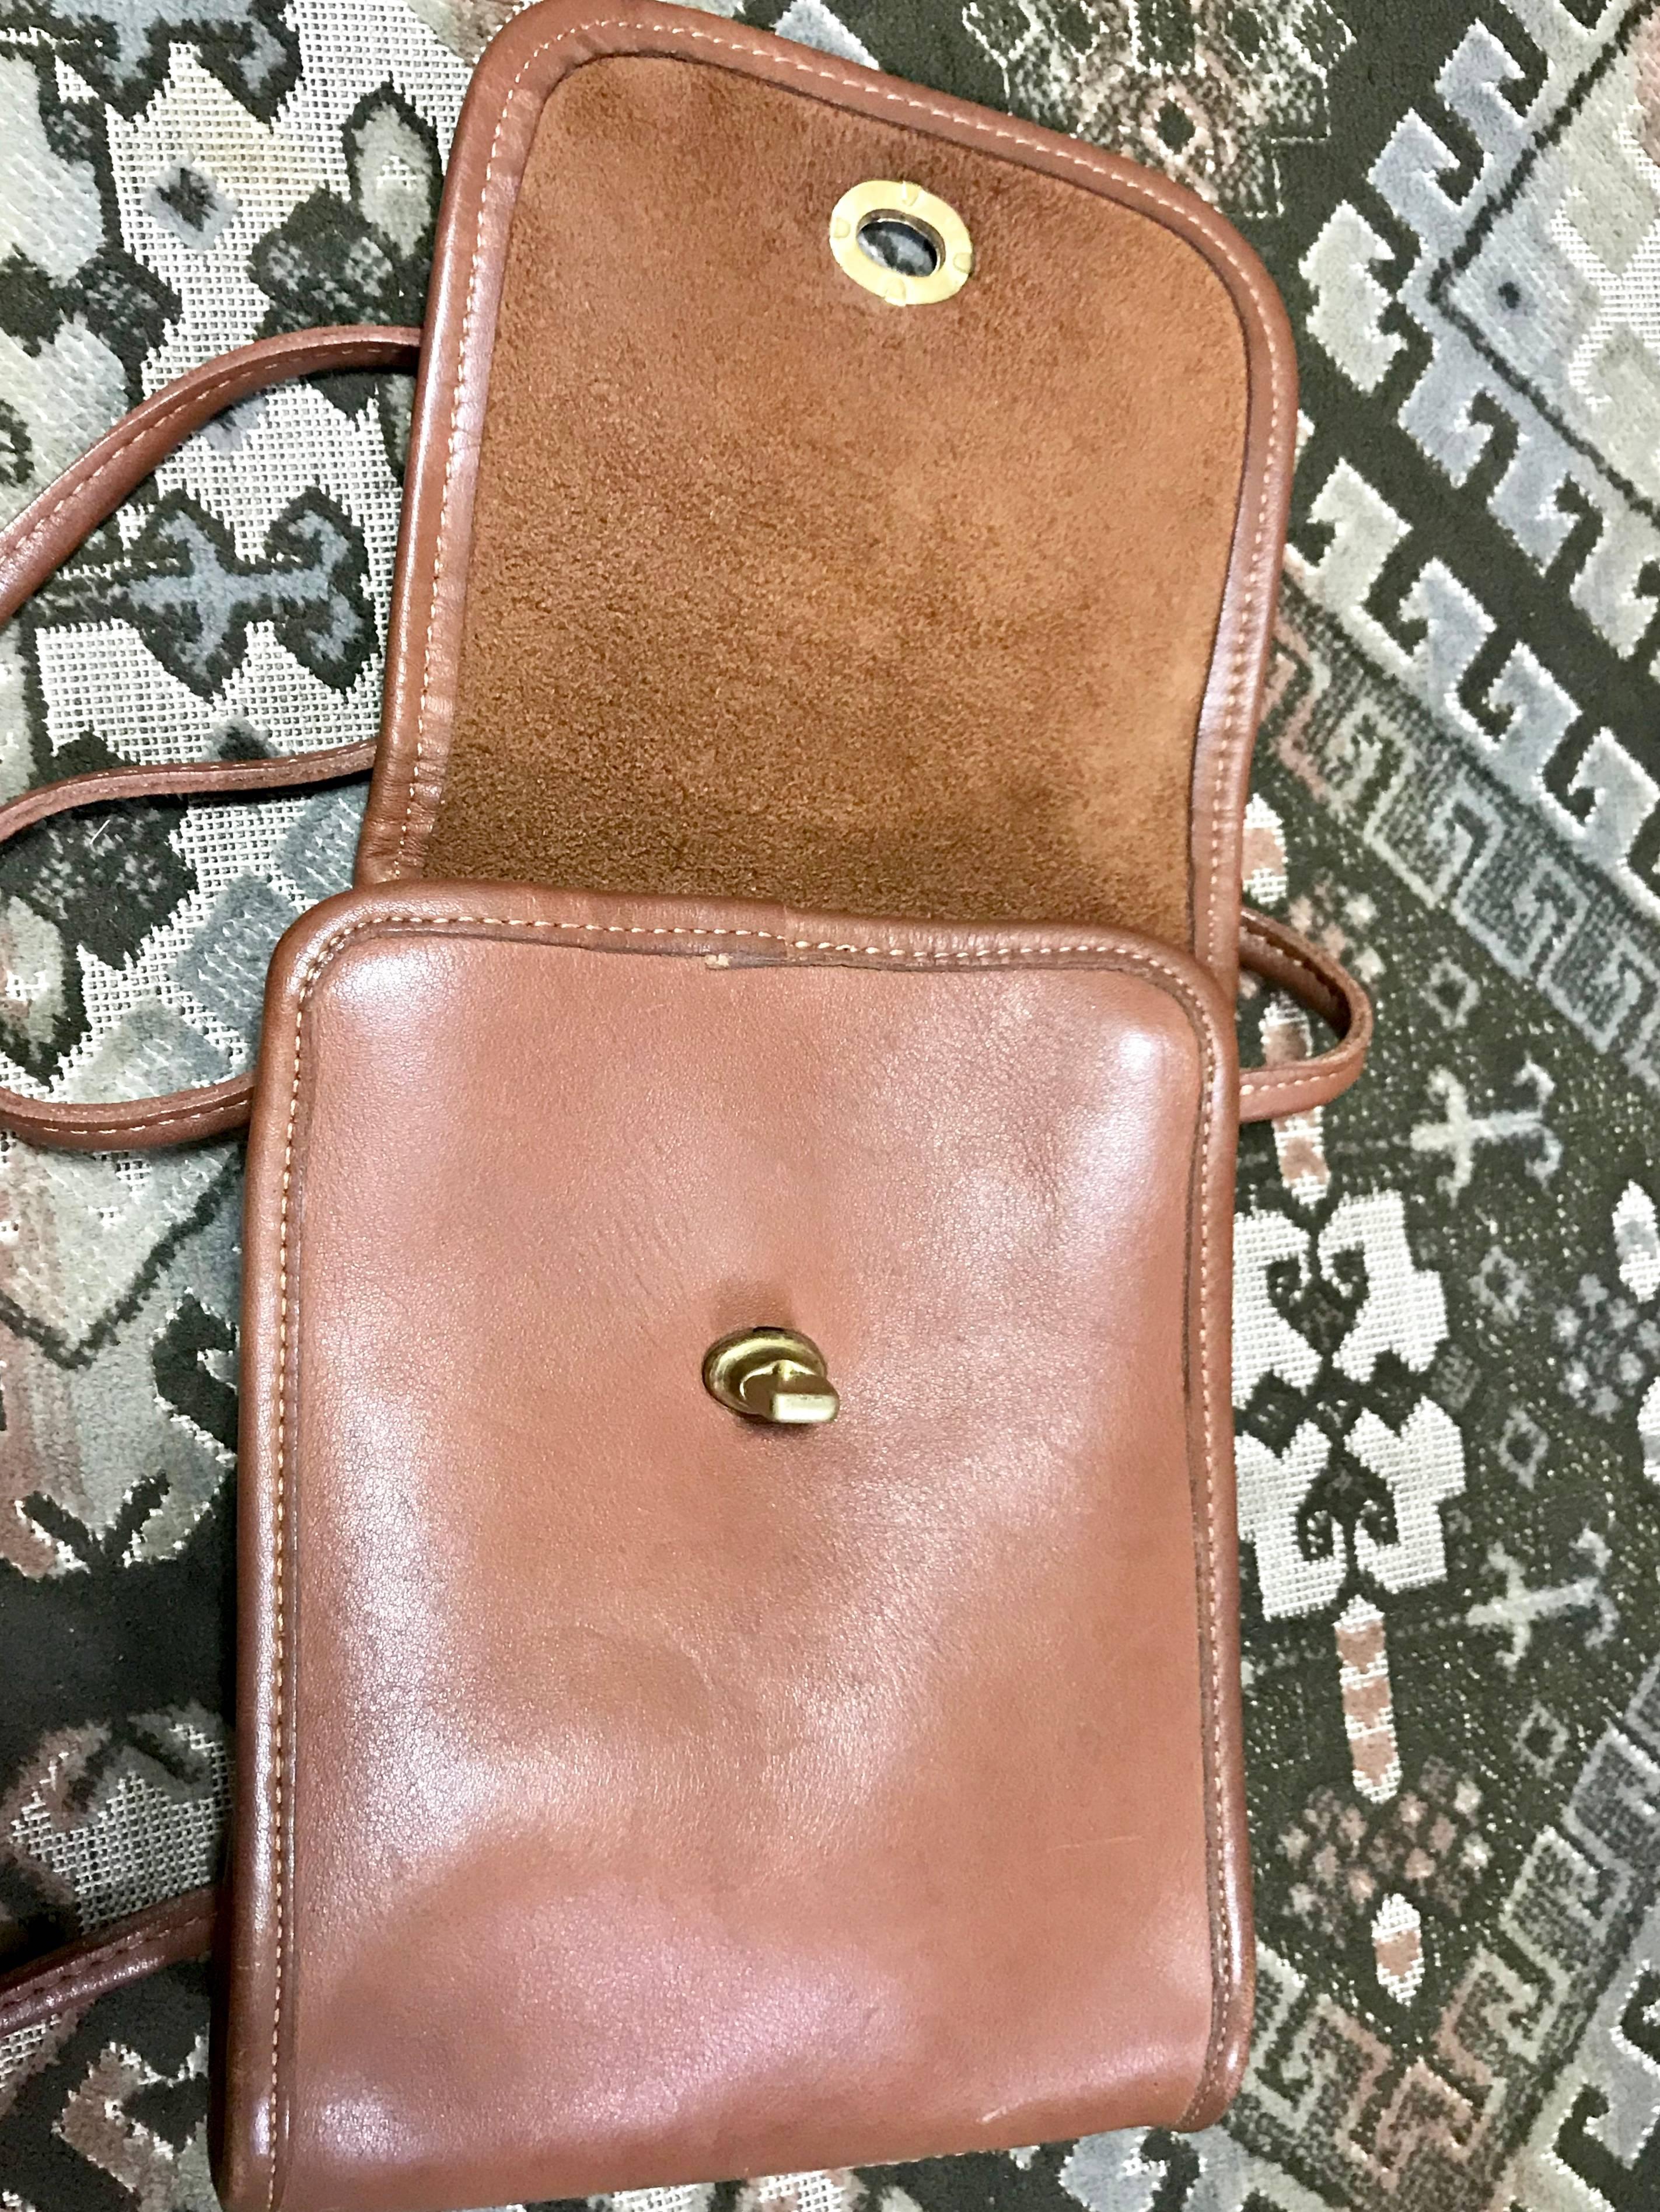 Vintage COACH genuine brown leather mini shoulder bag vertical rectangular shape In Good Condition For Sale In Kashiwa, Chiba